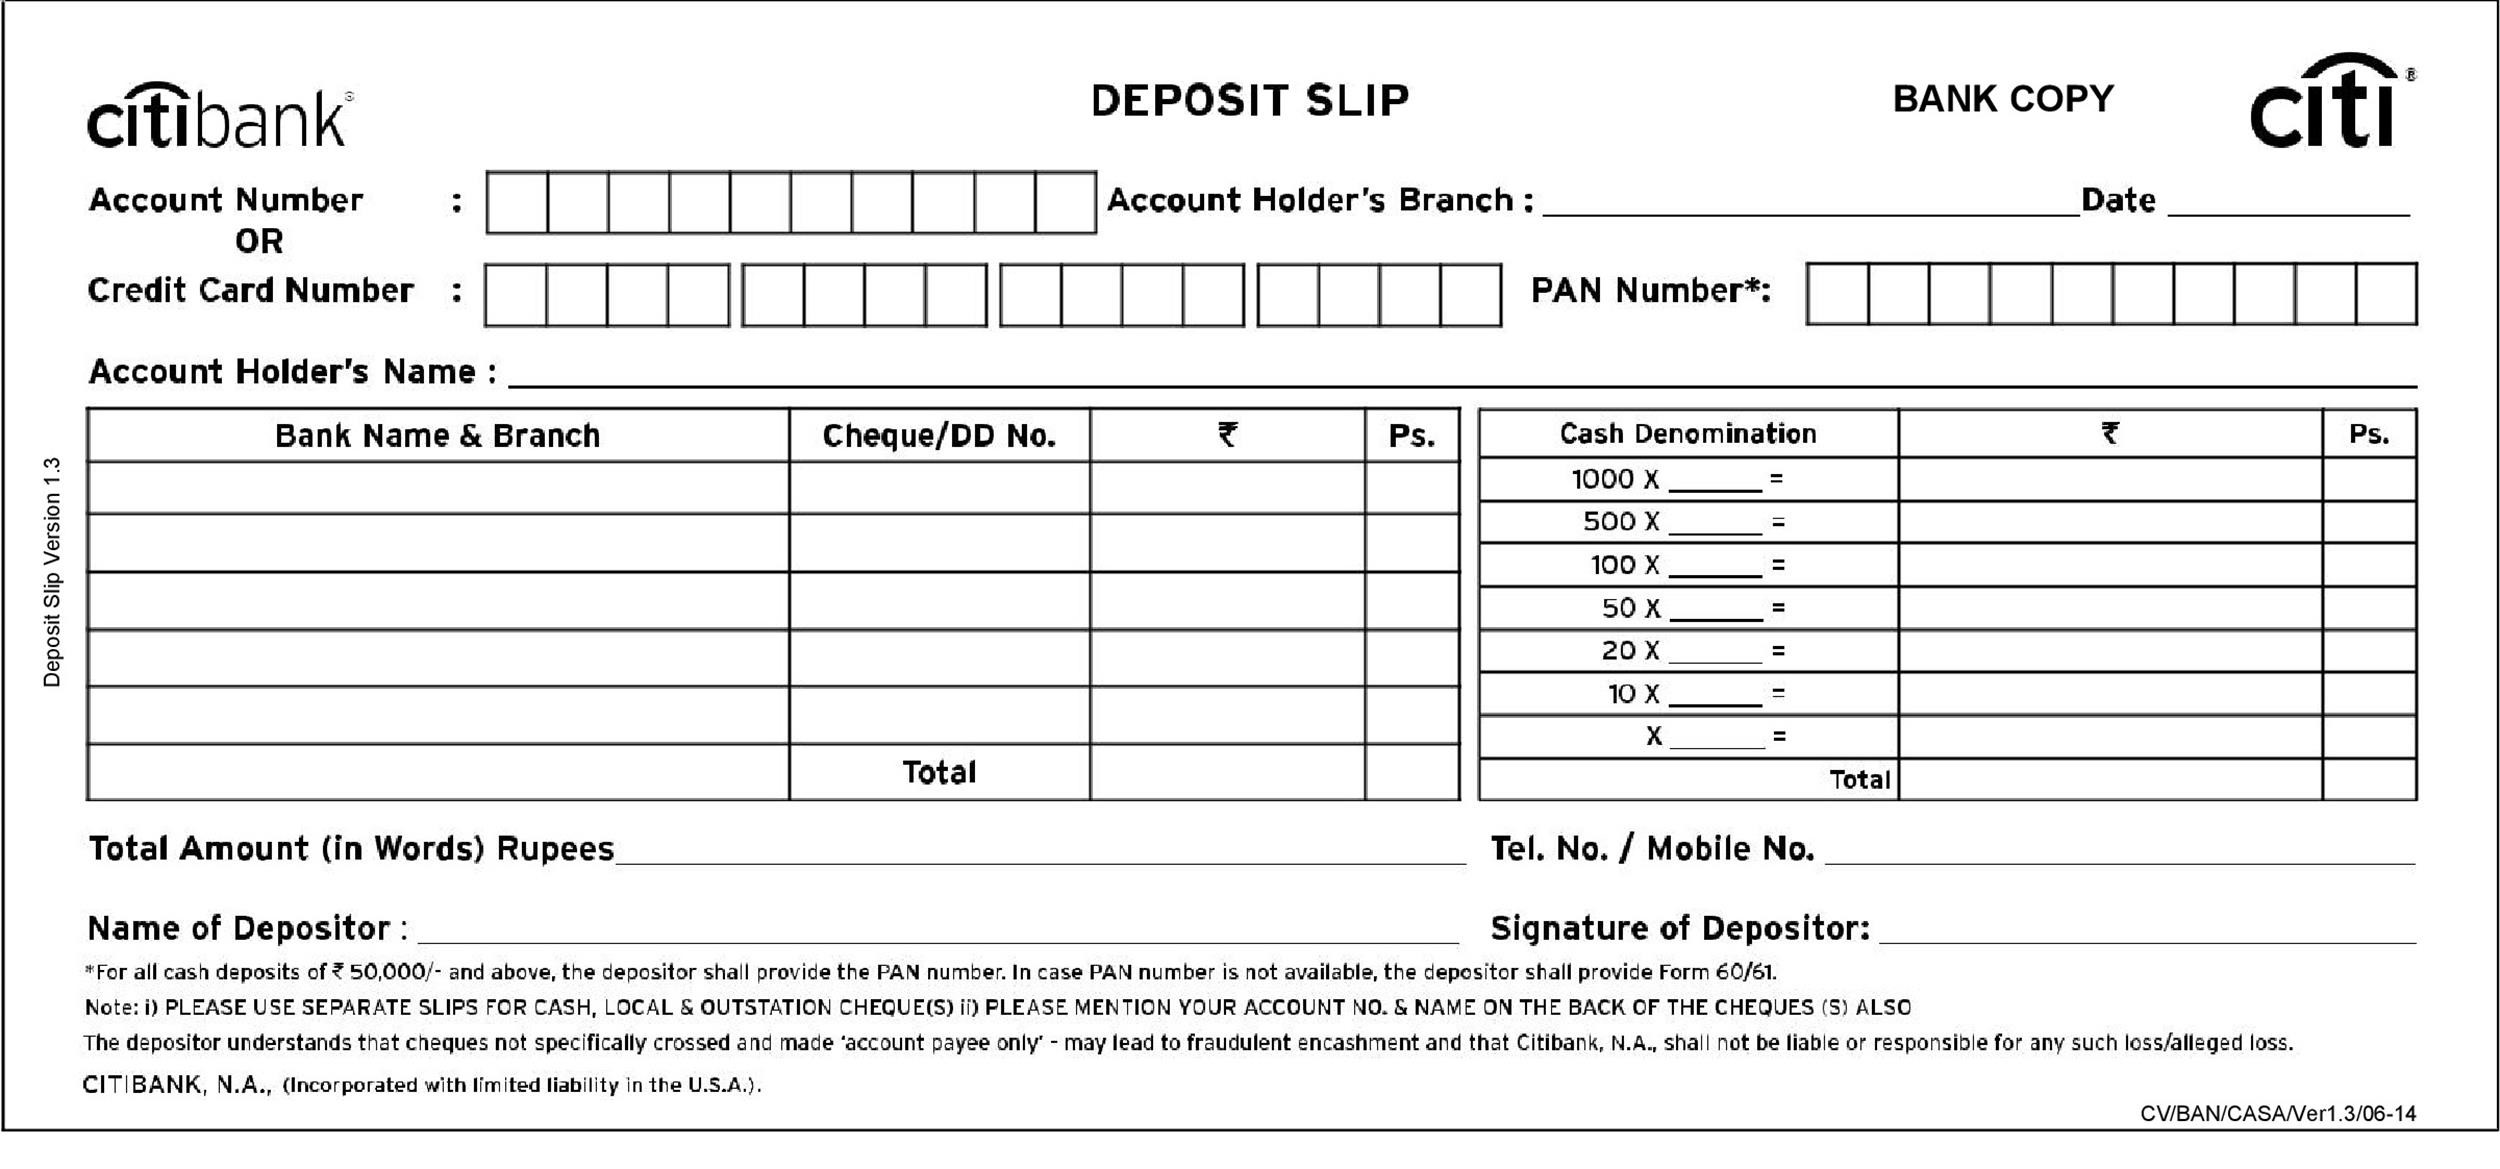 37 Bank Deposit Slip Templates & Examples ᐅ TemplateLab